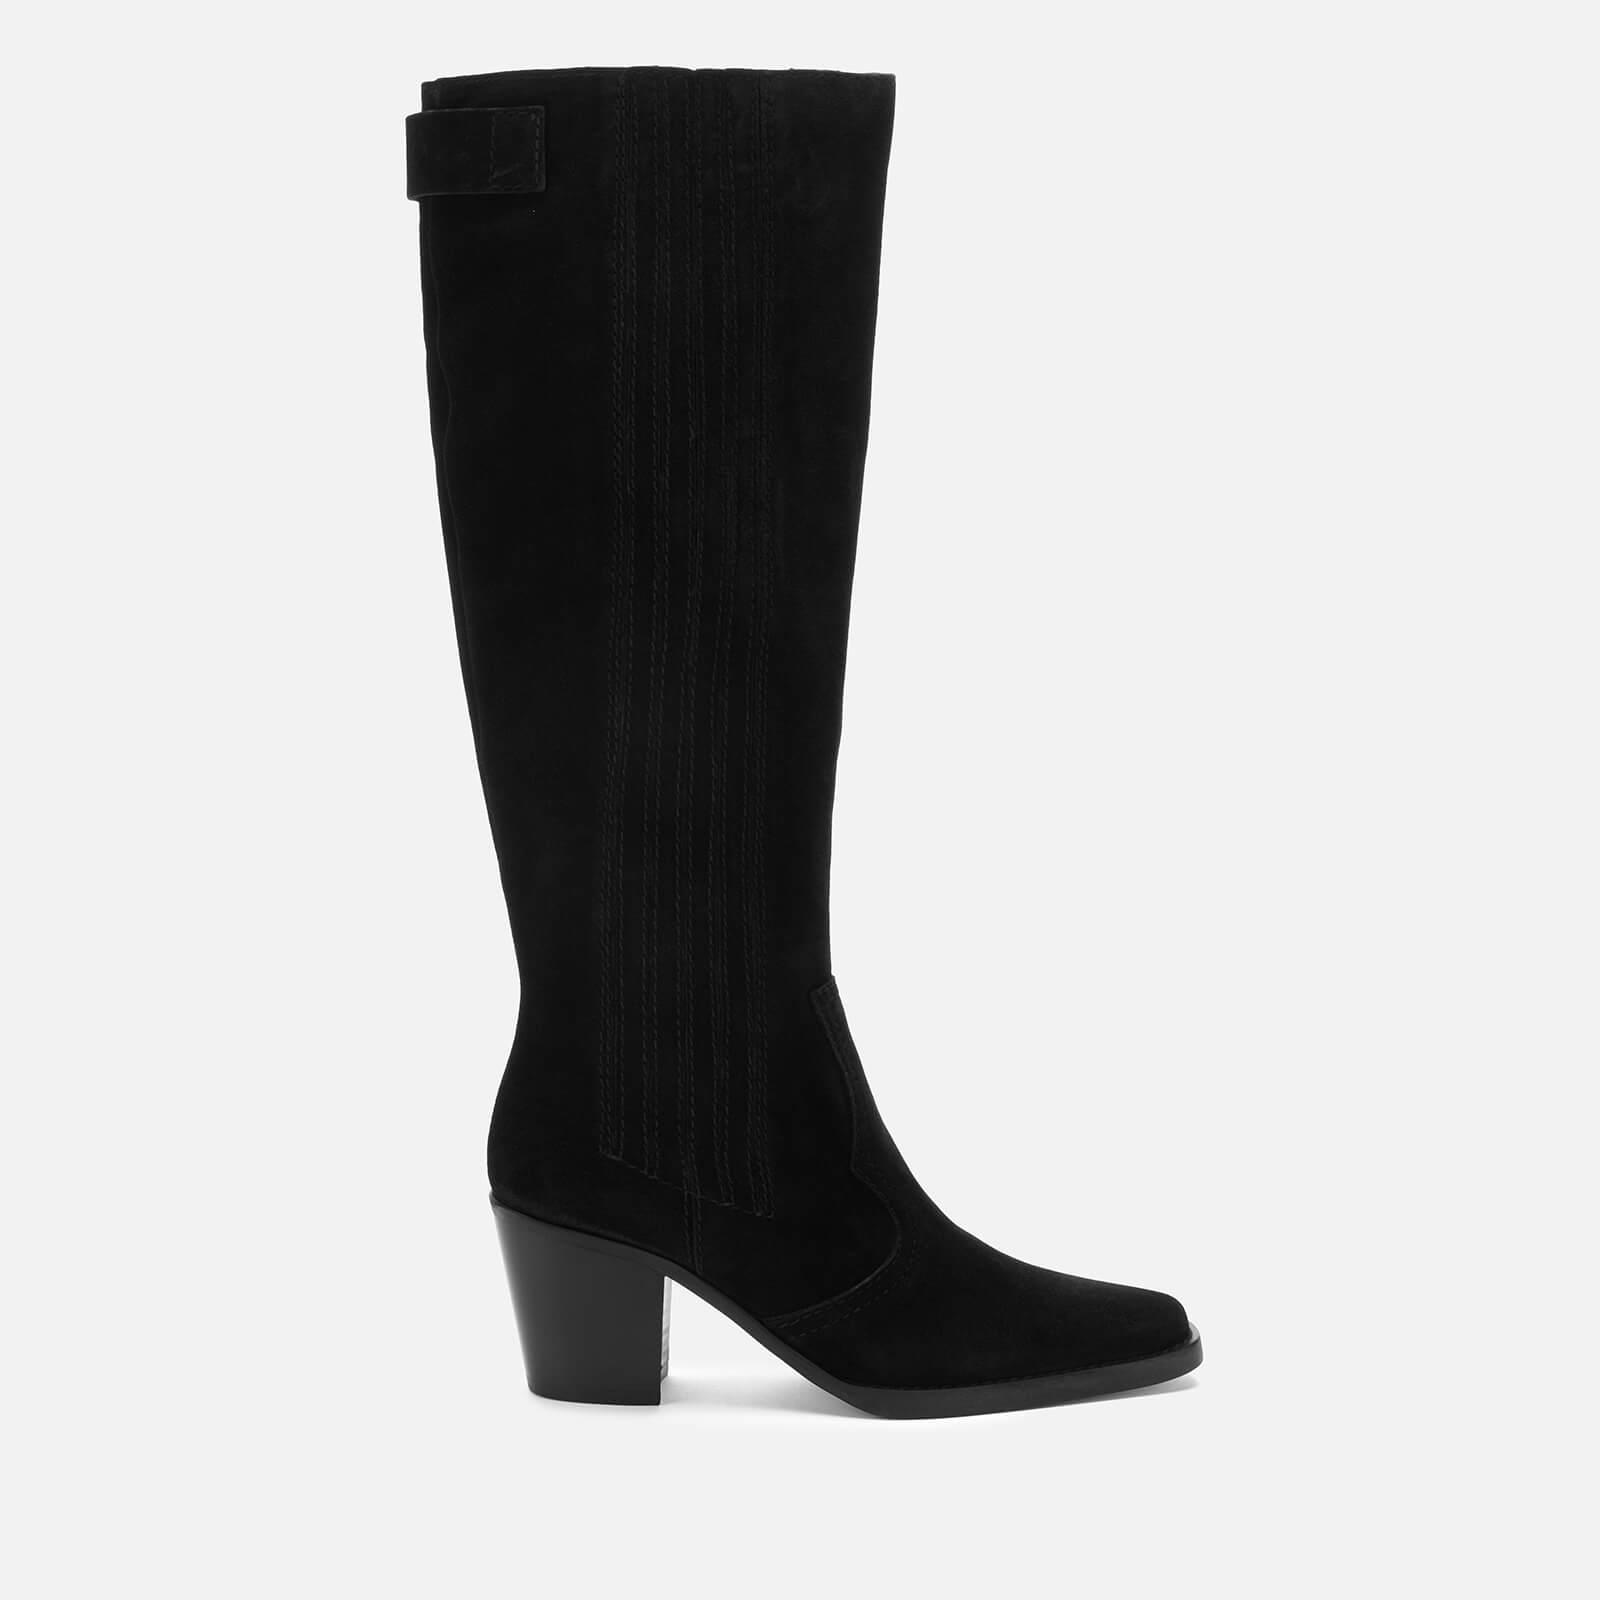 Ganni Western Suede Knee High Boots in Black - Lyst